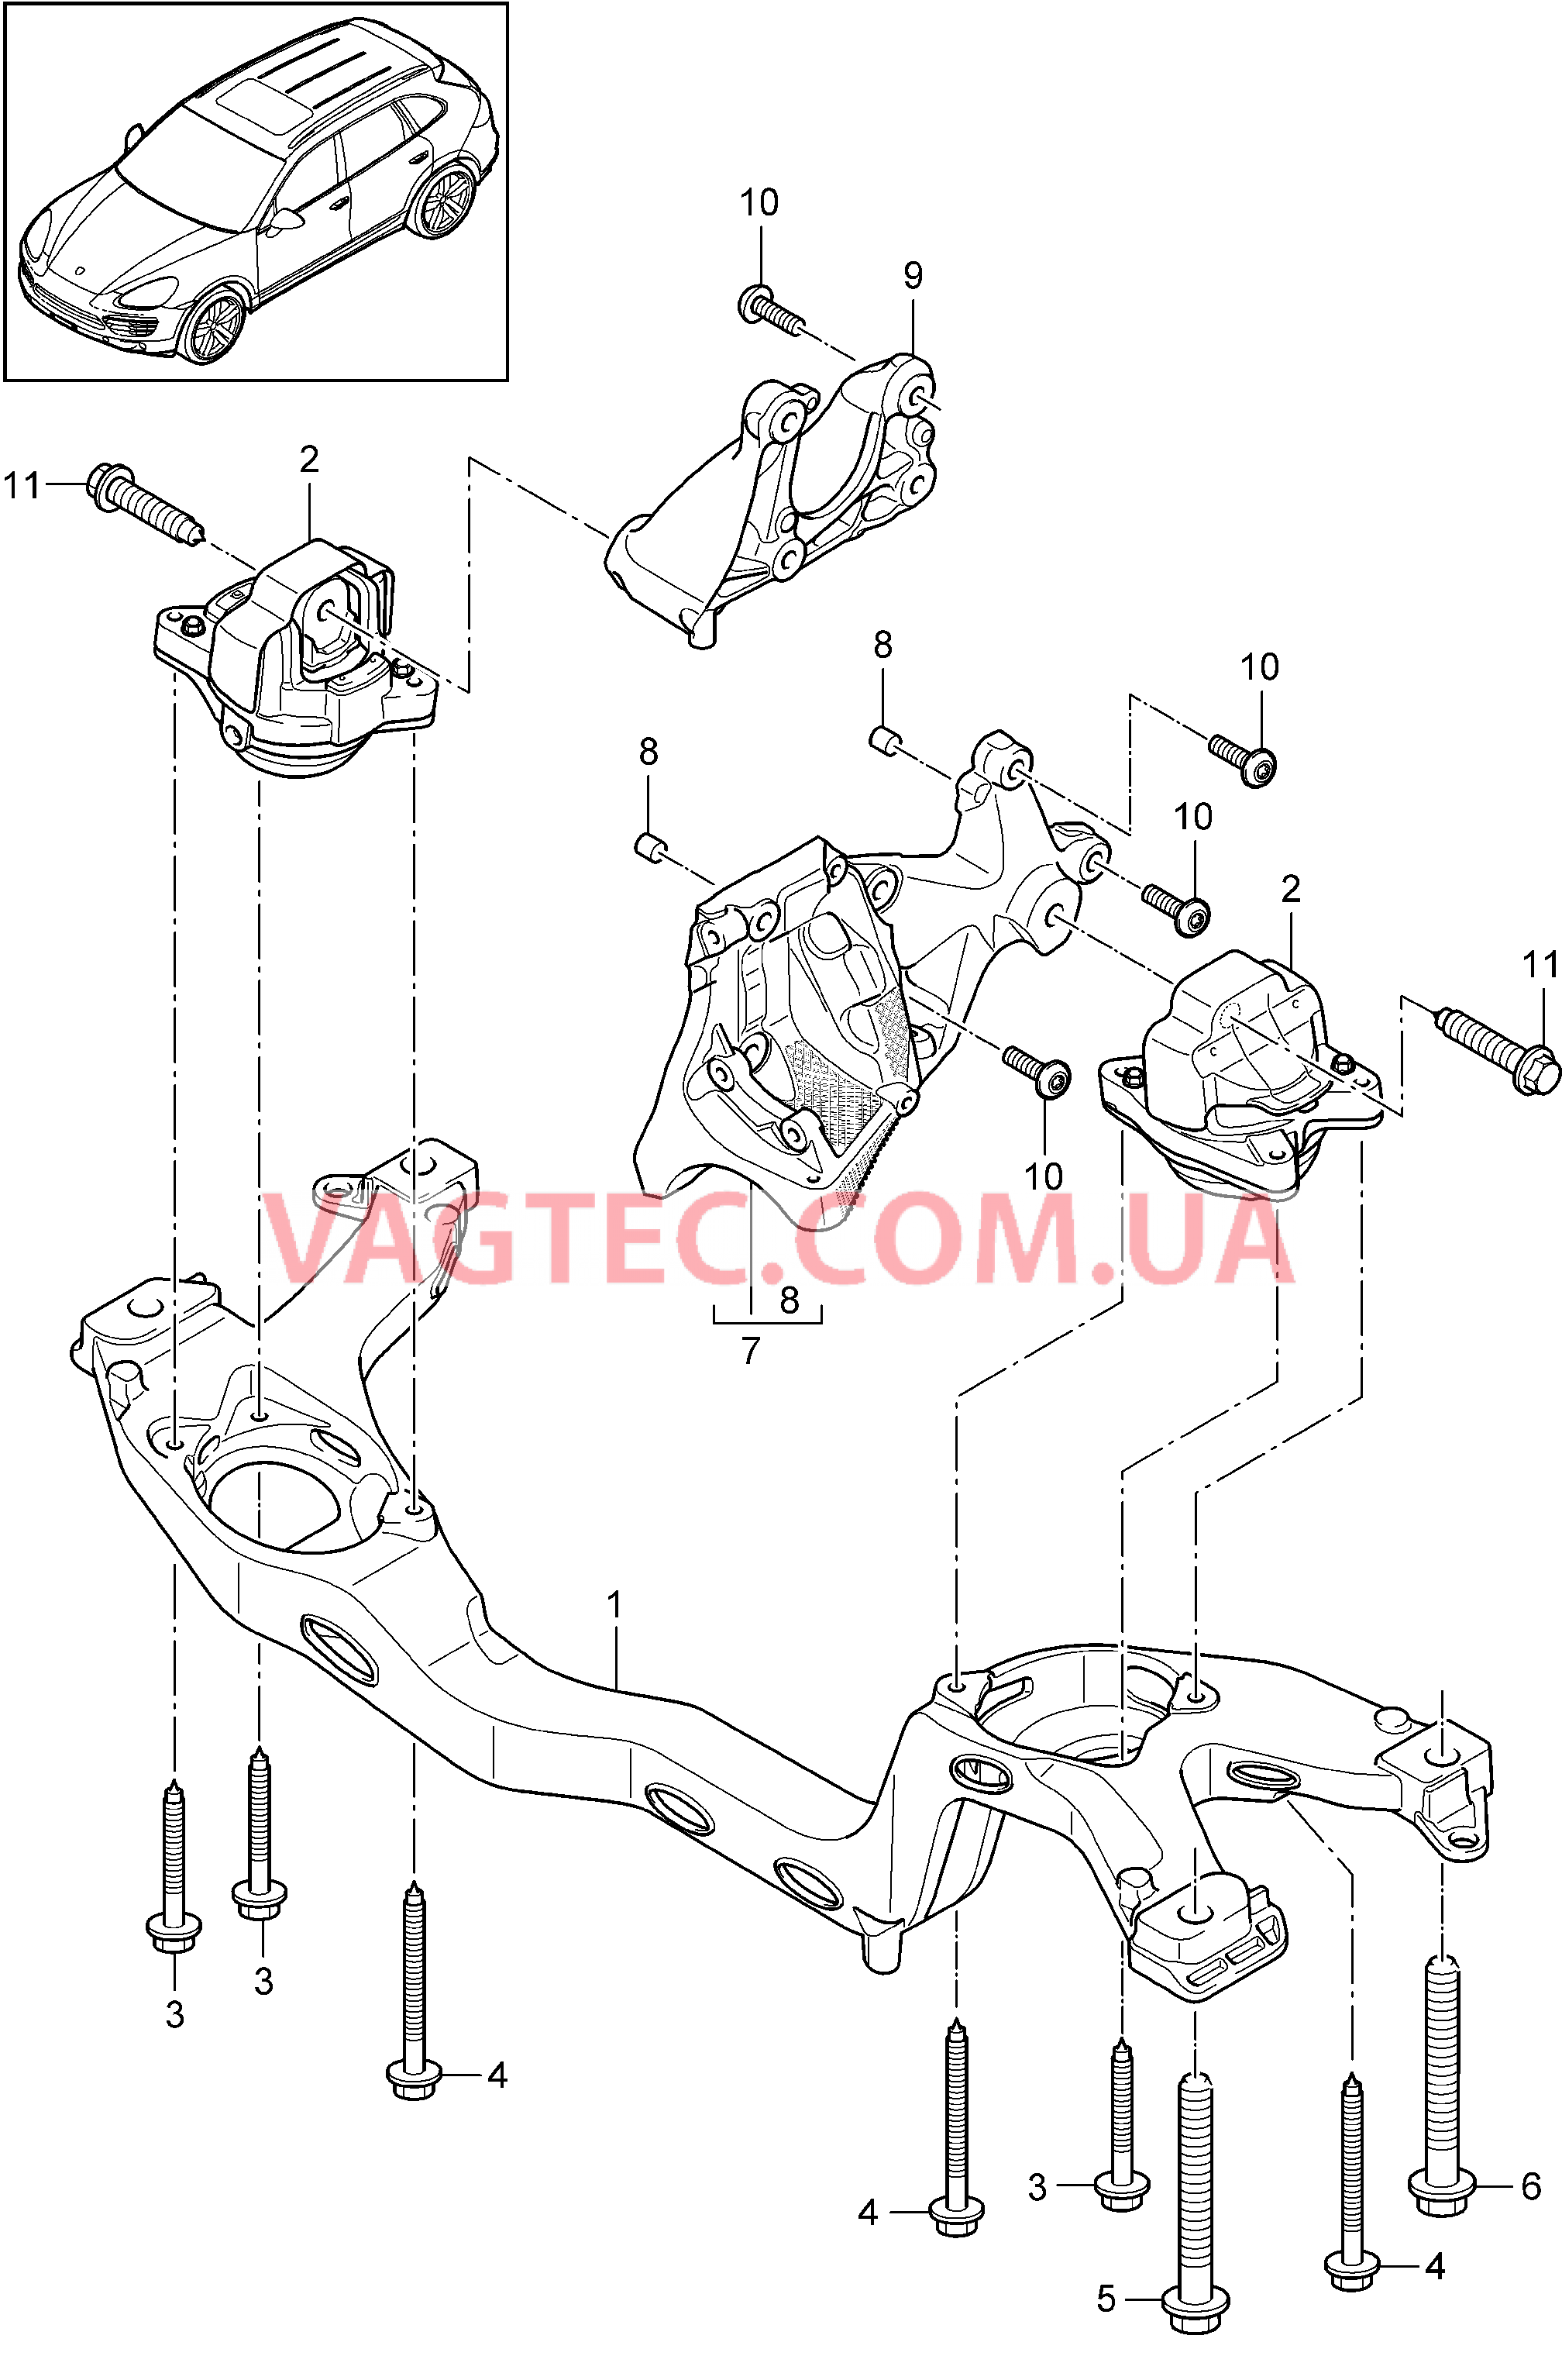 109-012 Подвеска двигателя, нижний
						
						MCU.RA, MCX.ZA для PORSCHE Cayenne 2011-2018USA